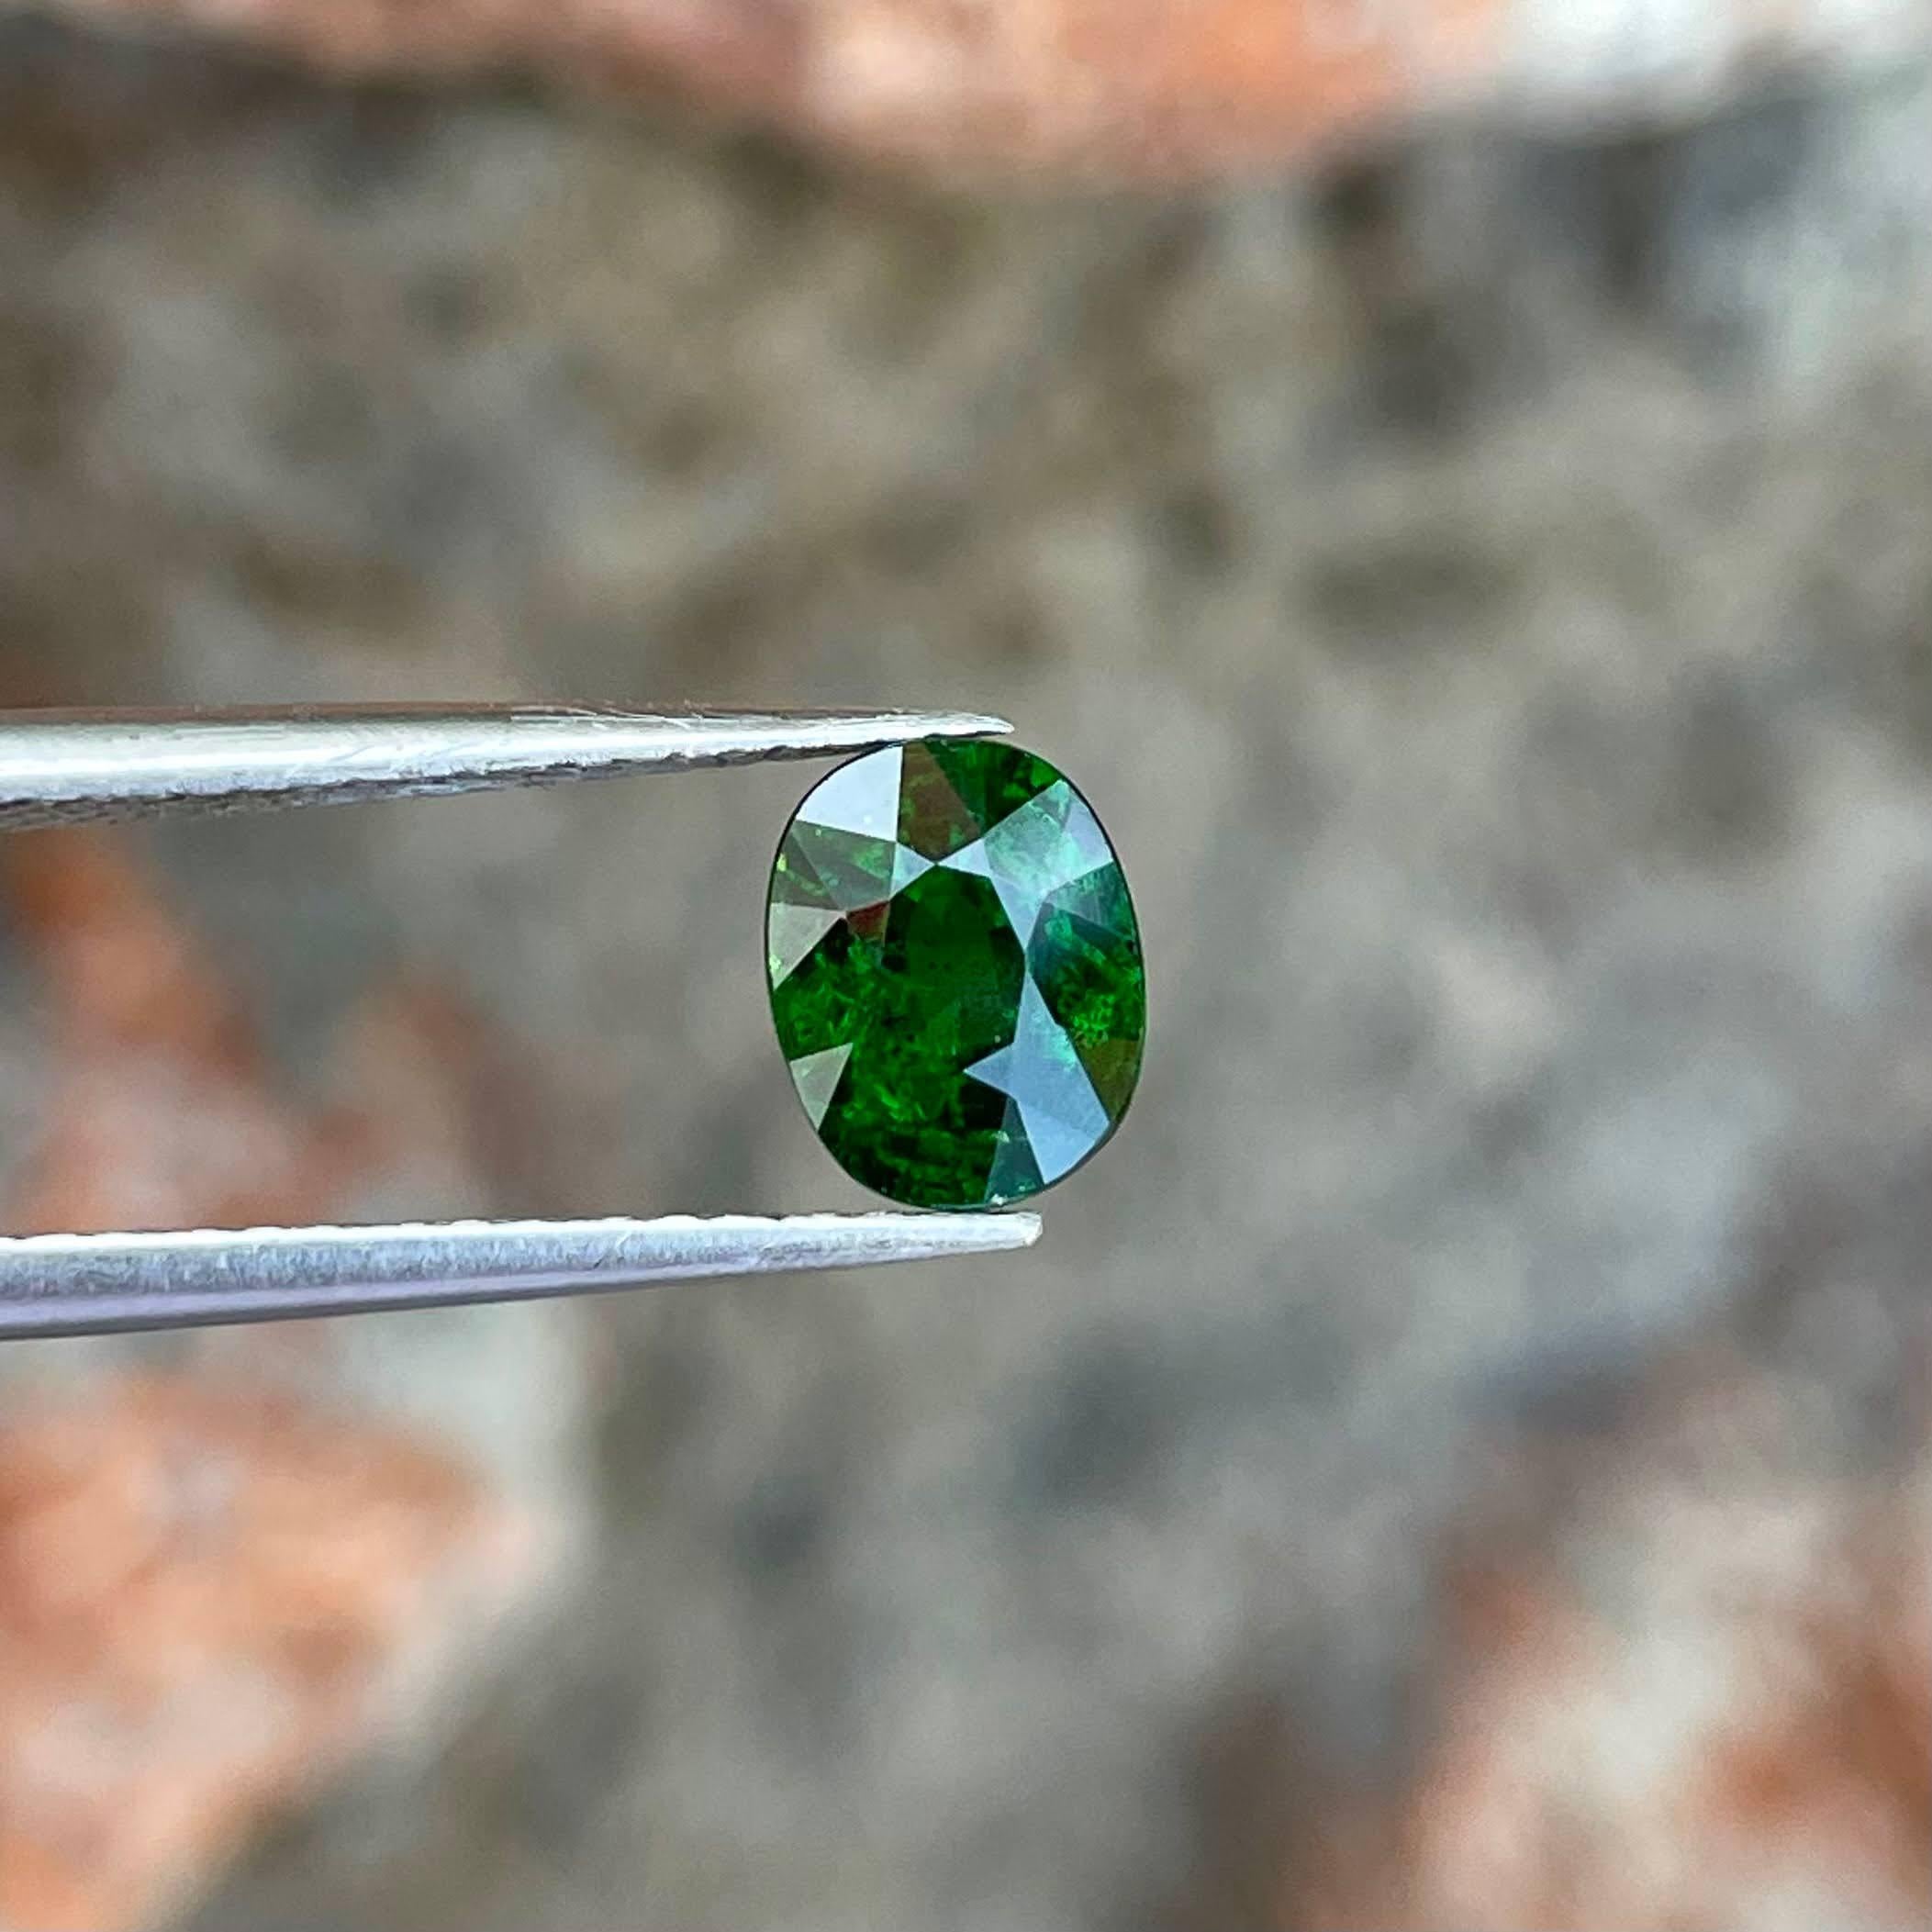 Modern 1.45 Carats Rich Green Tsavorite Garnet Oval Cut Natural Gemstone From Kenya For Sale